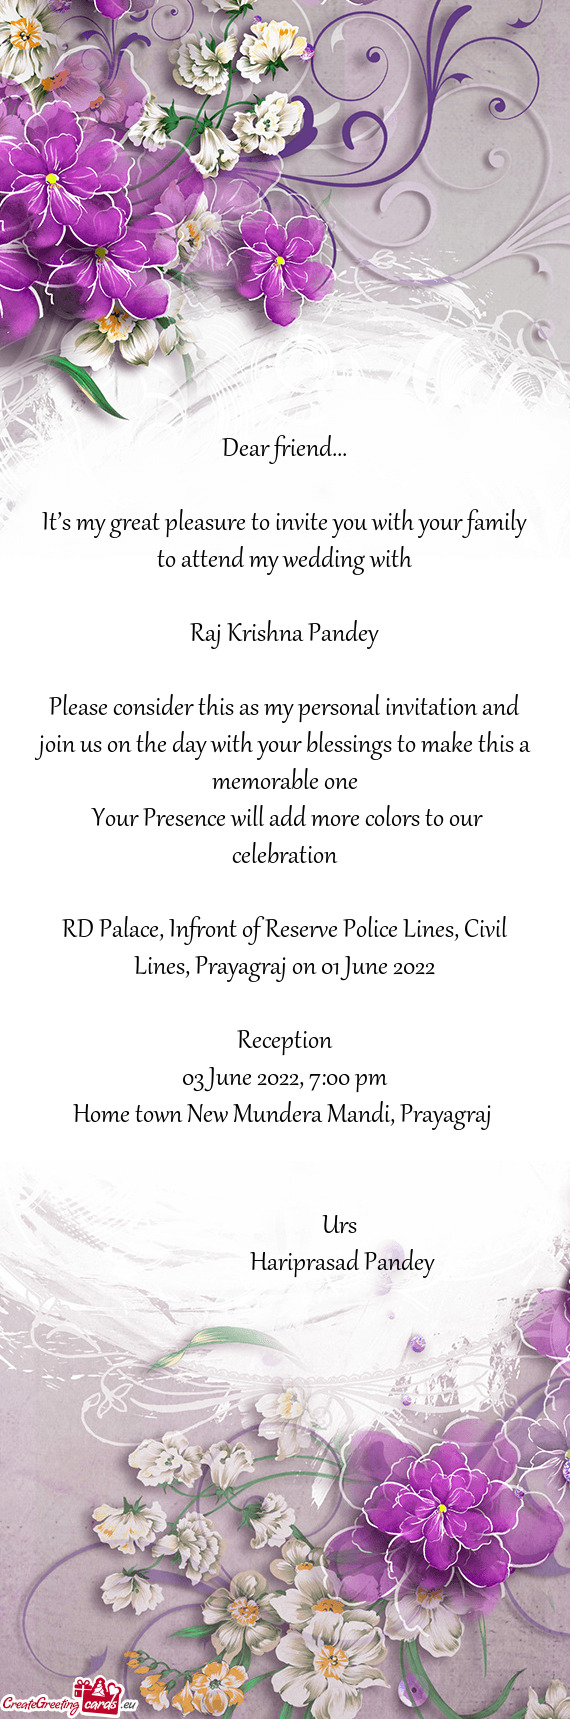 Raj Krishna Pandey